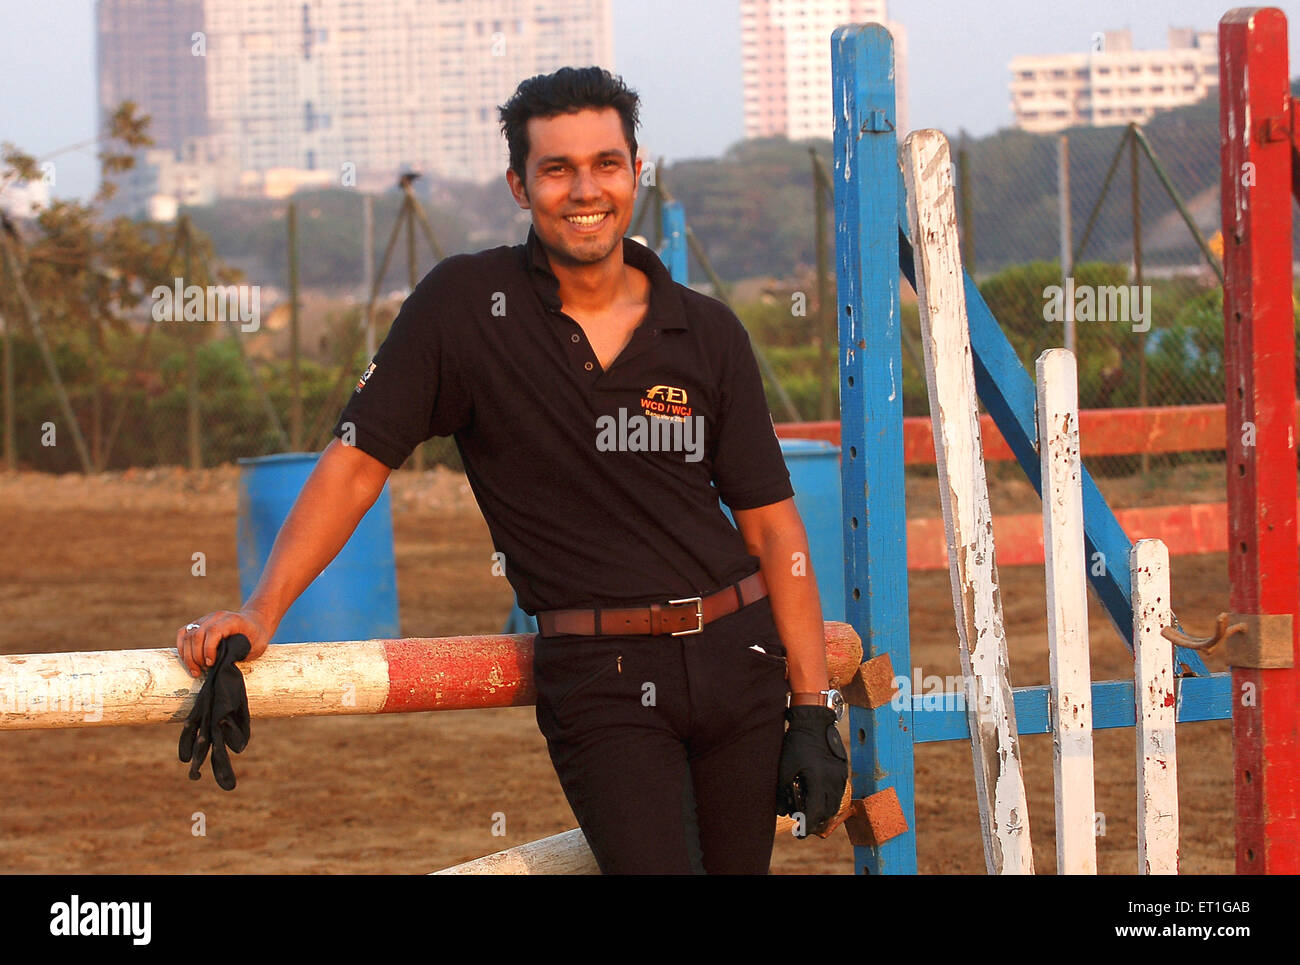 Randeep Hooda, Indian actor, Indian equestrian, India, Asia Stock Photo